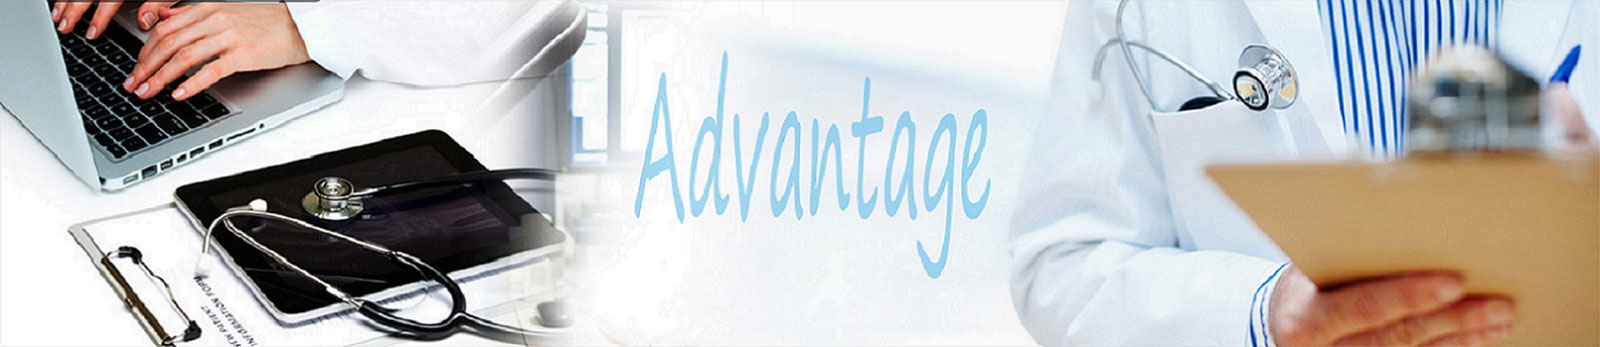 advantage-banner